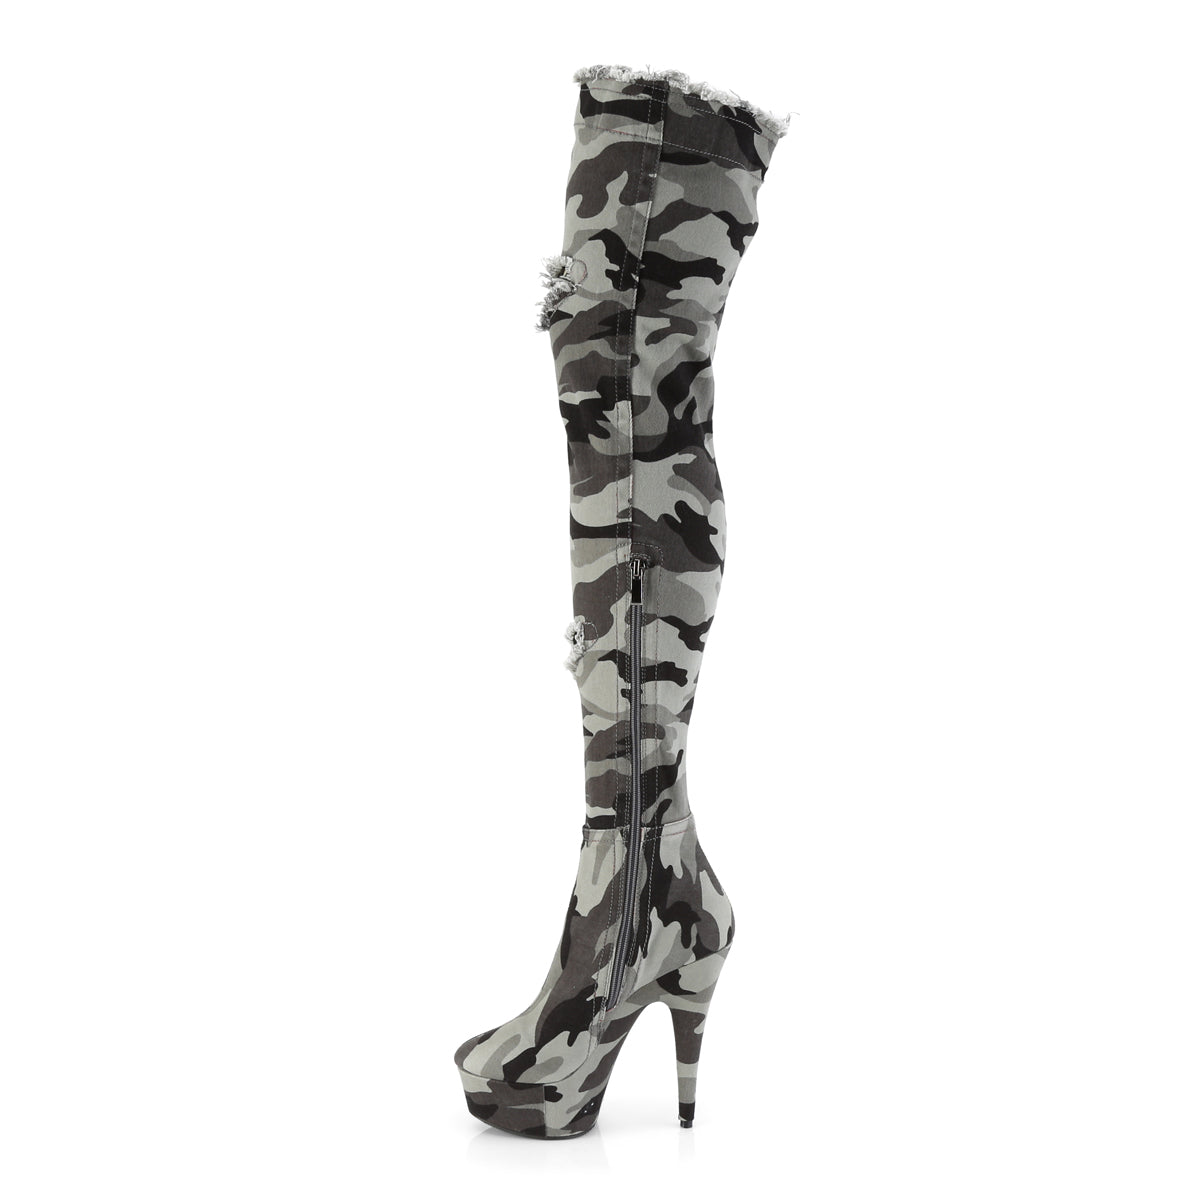 Pleaser Womens Boots DELIGHT-3005 Camo Str Fabric/Camo Str Fabric